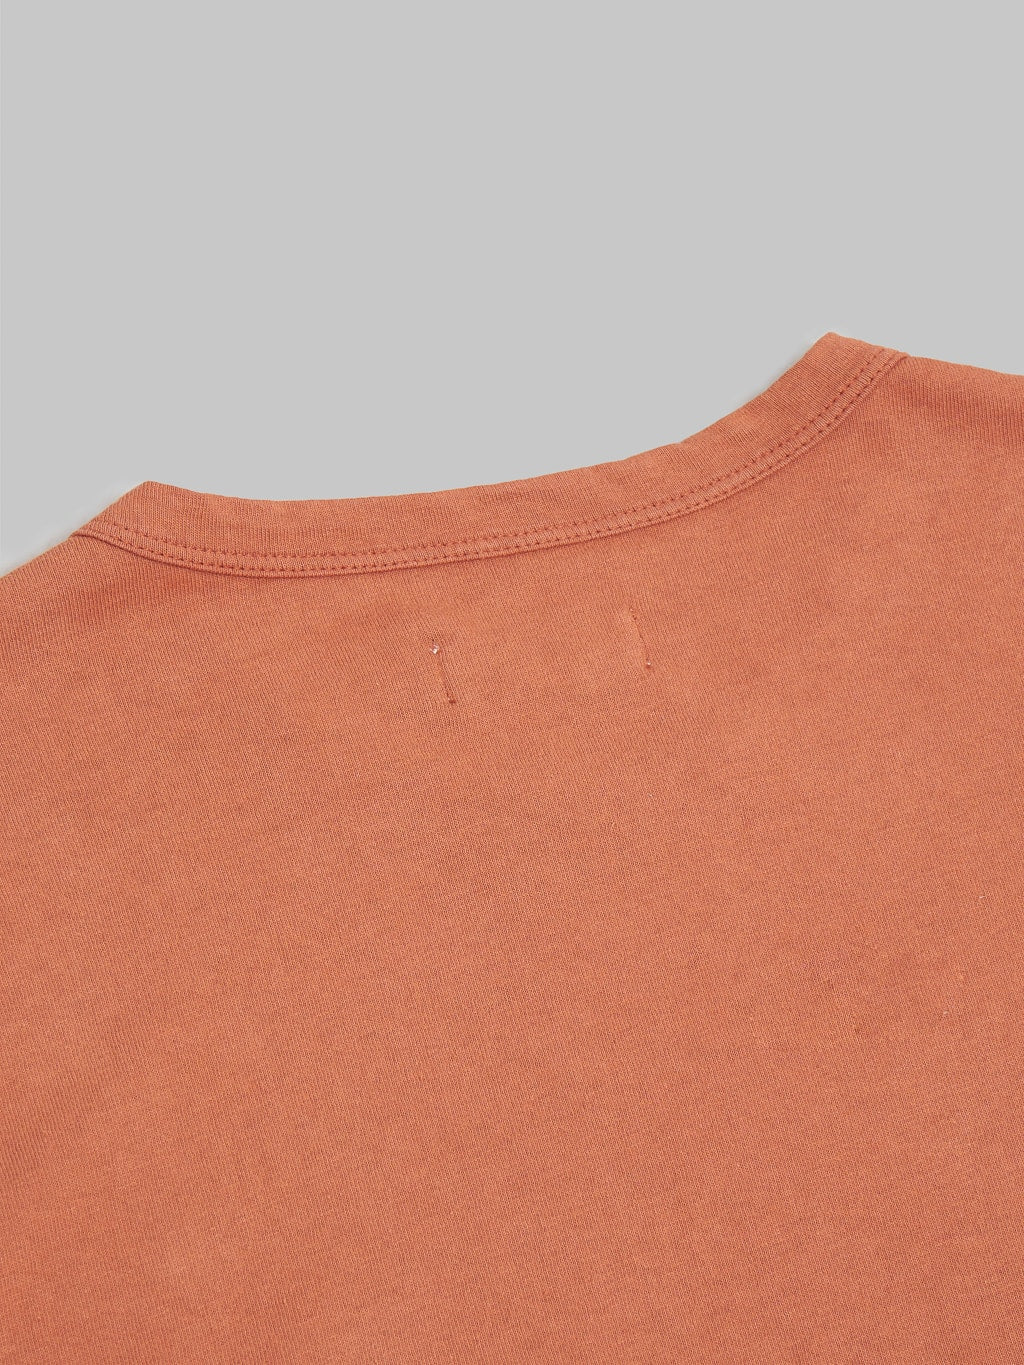 Freenote cloth nine ounce pocket tshirt rust dyeing